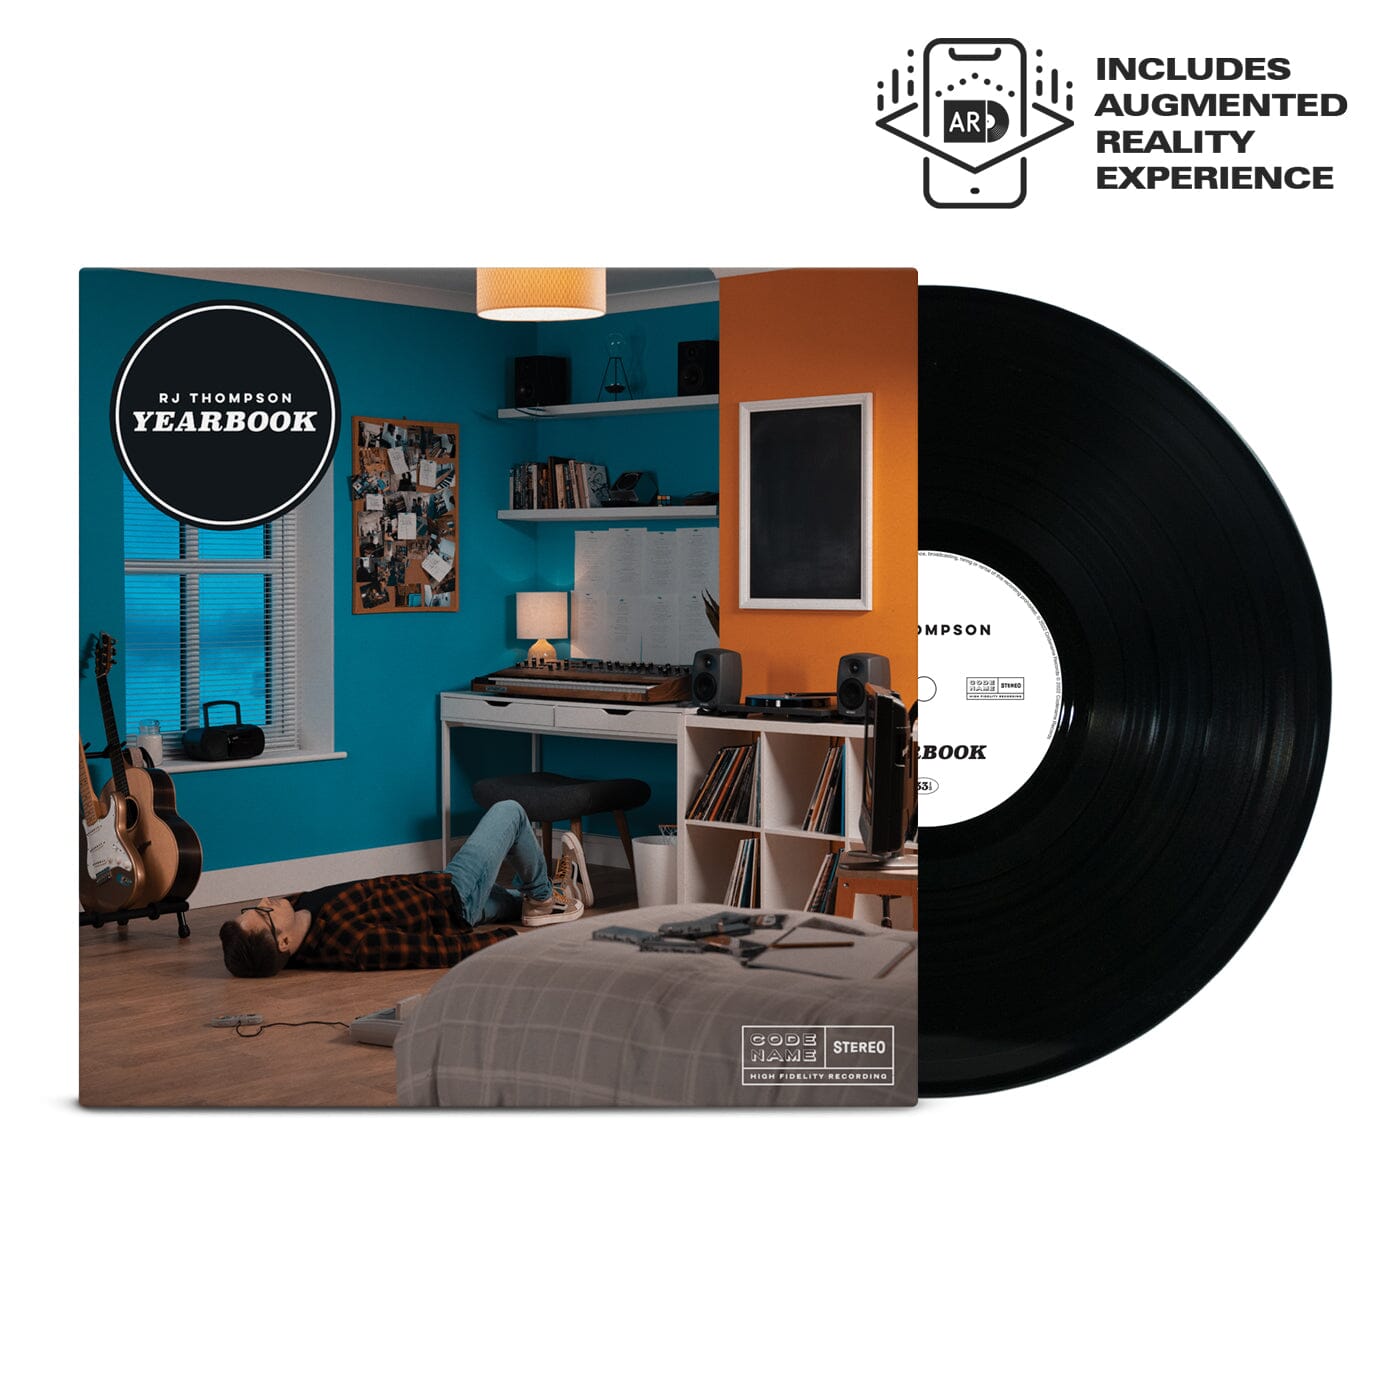 Yearbook - Limited Edition Vinyl LP | RJ Thompson